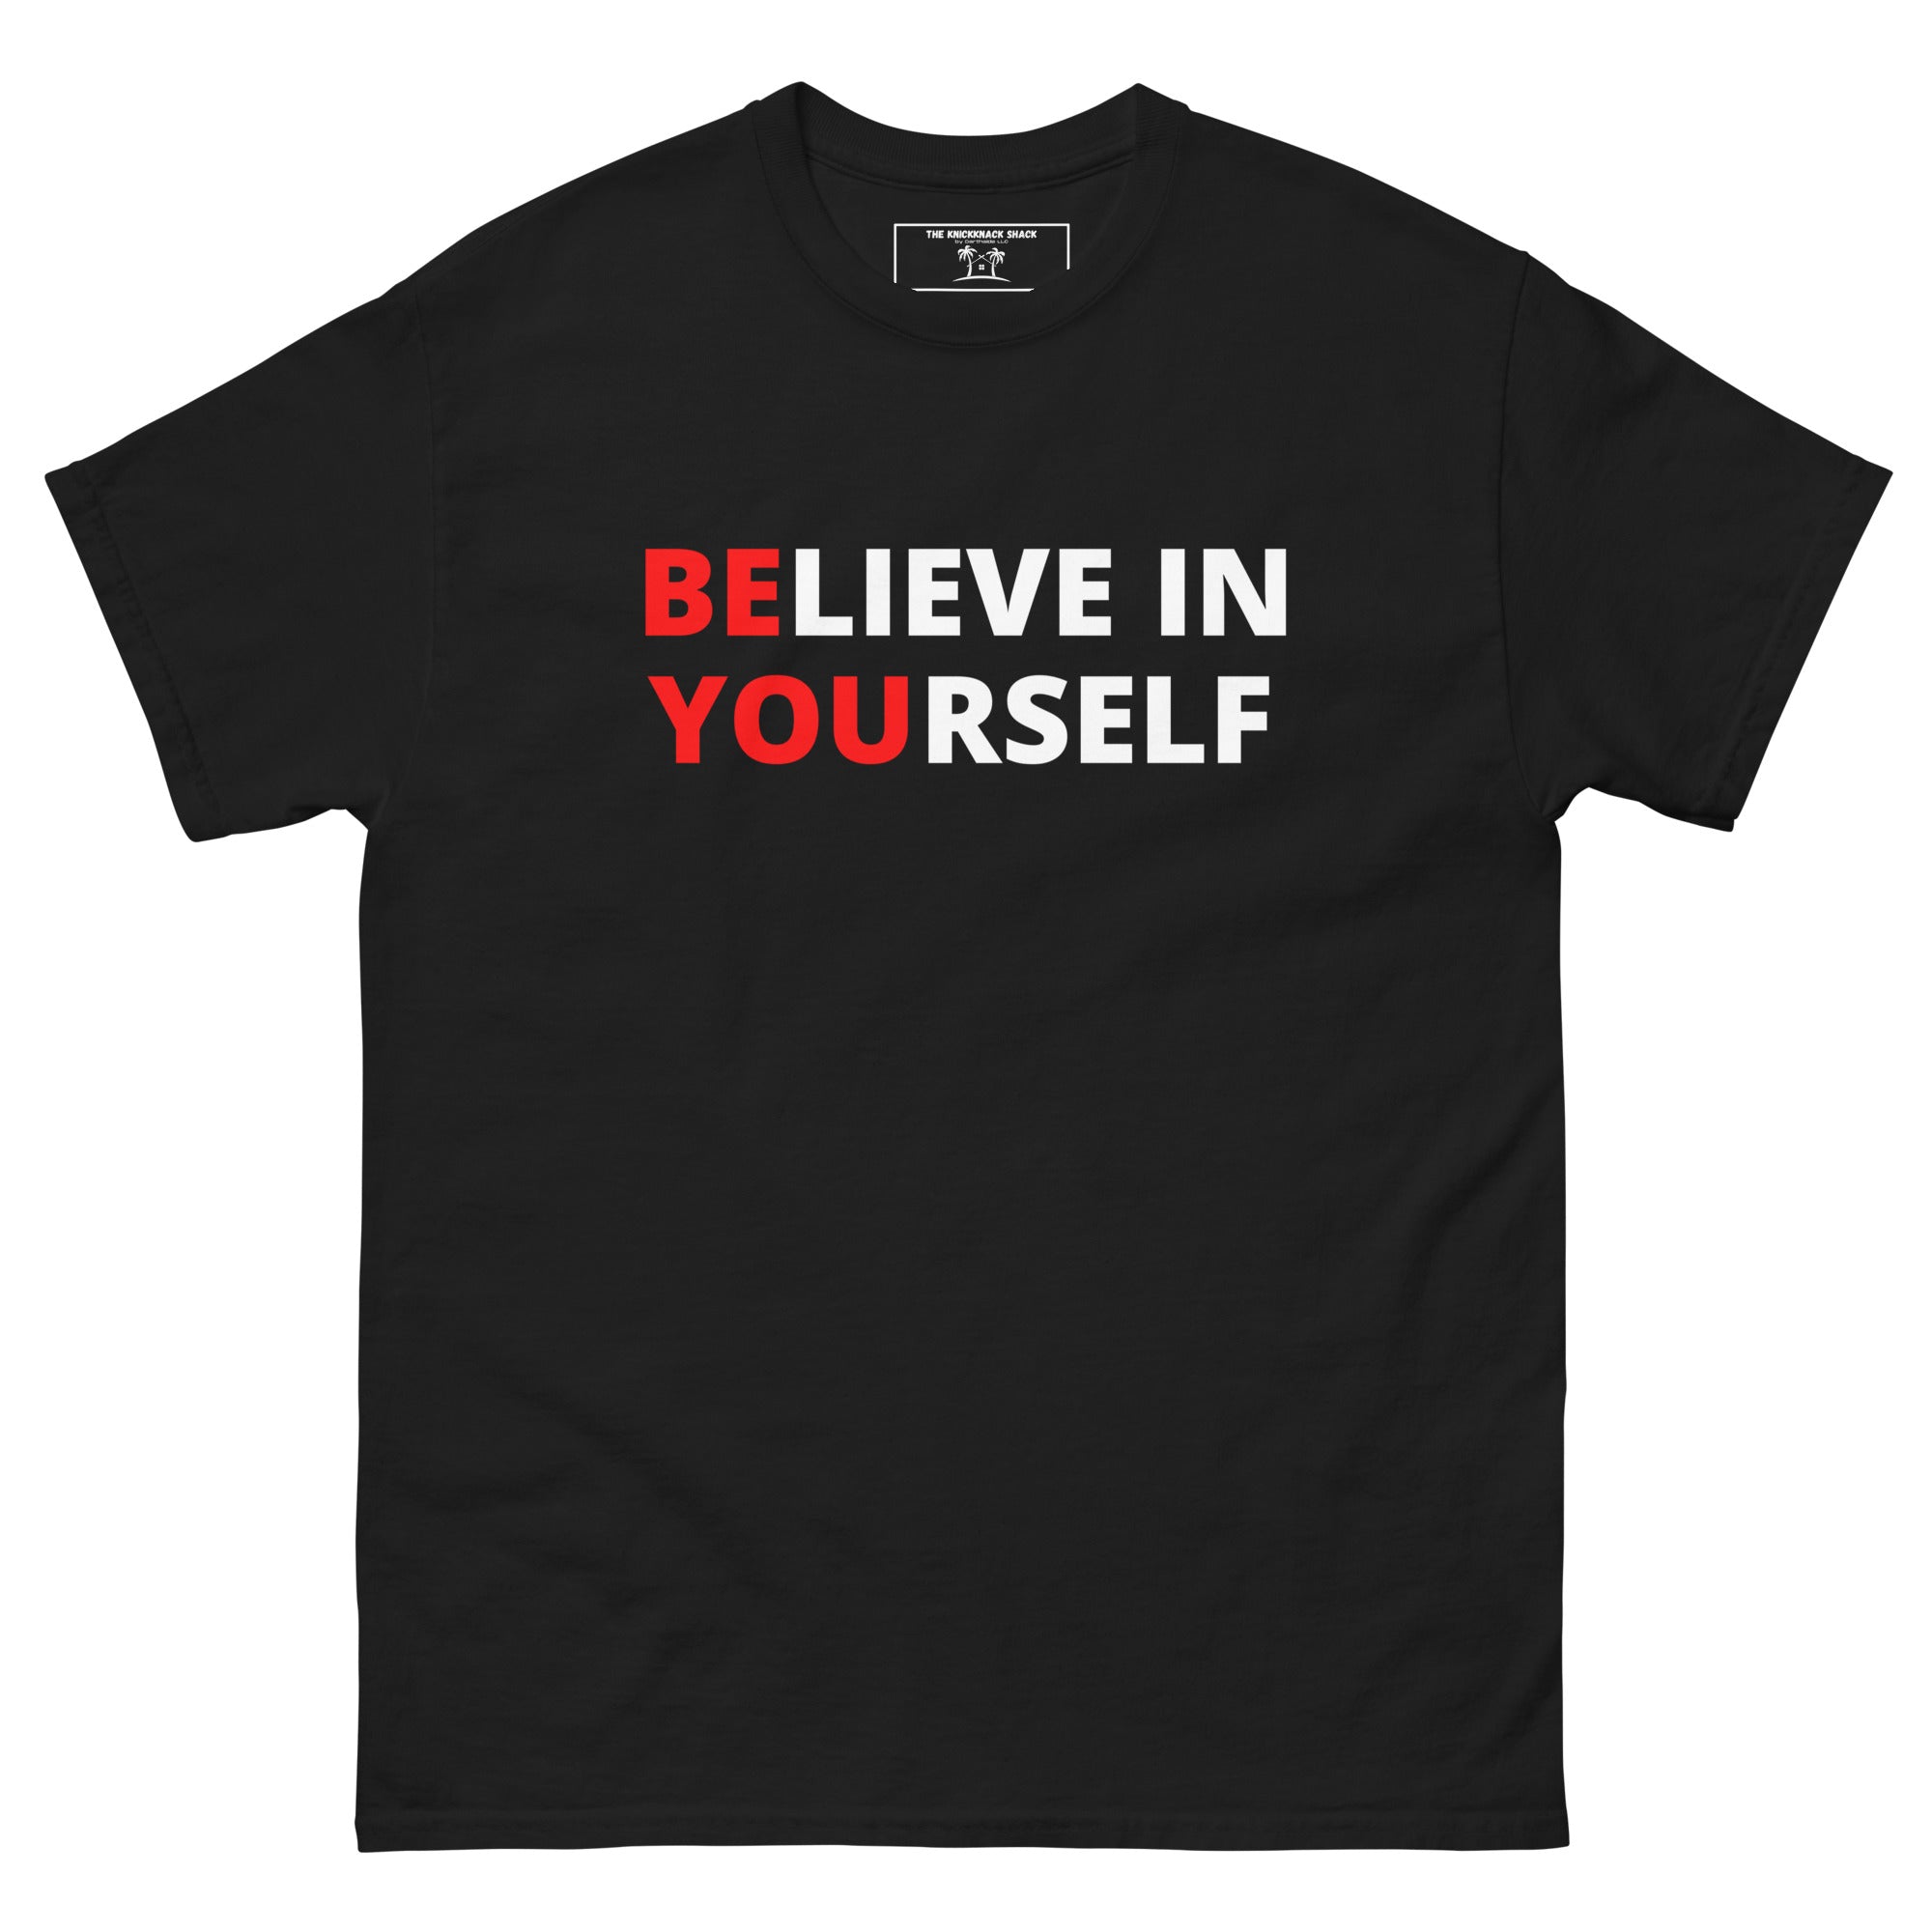 Tee-shirt classique - Be You (couleurs sombres)